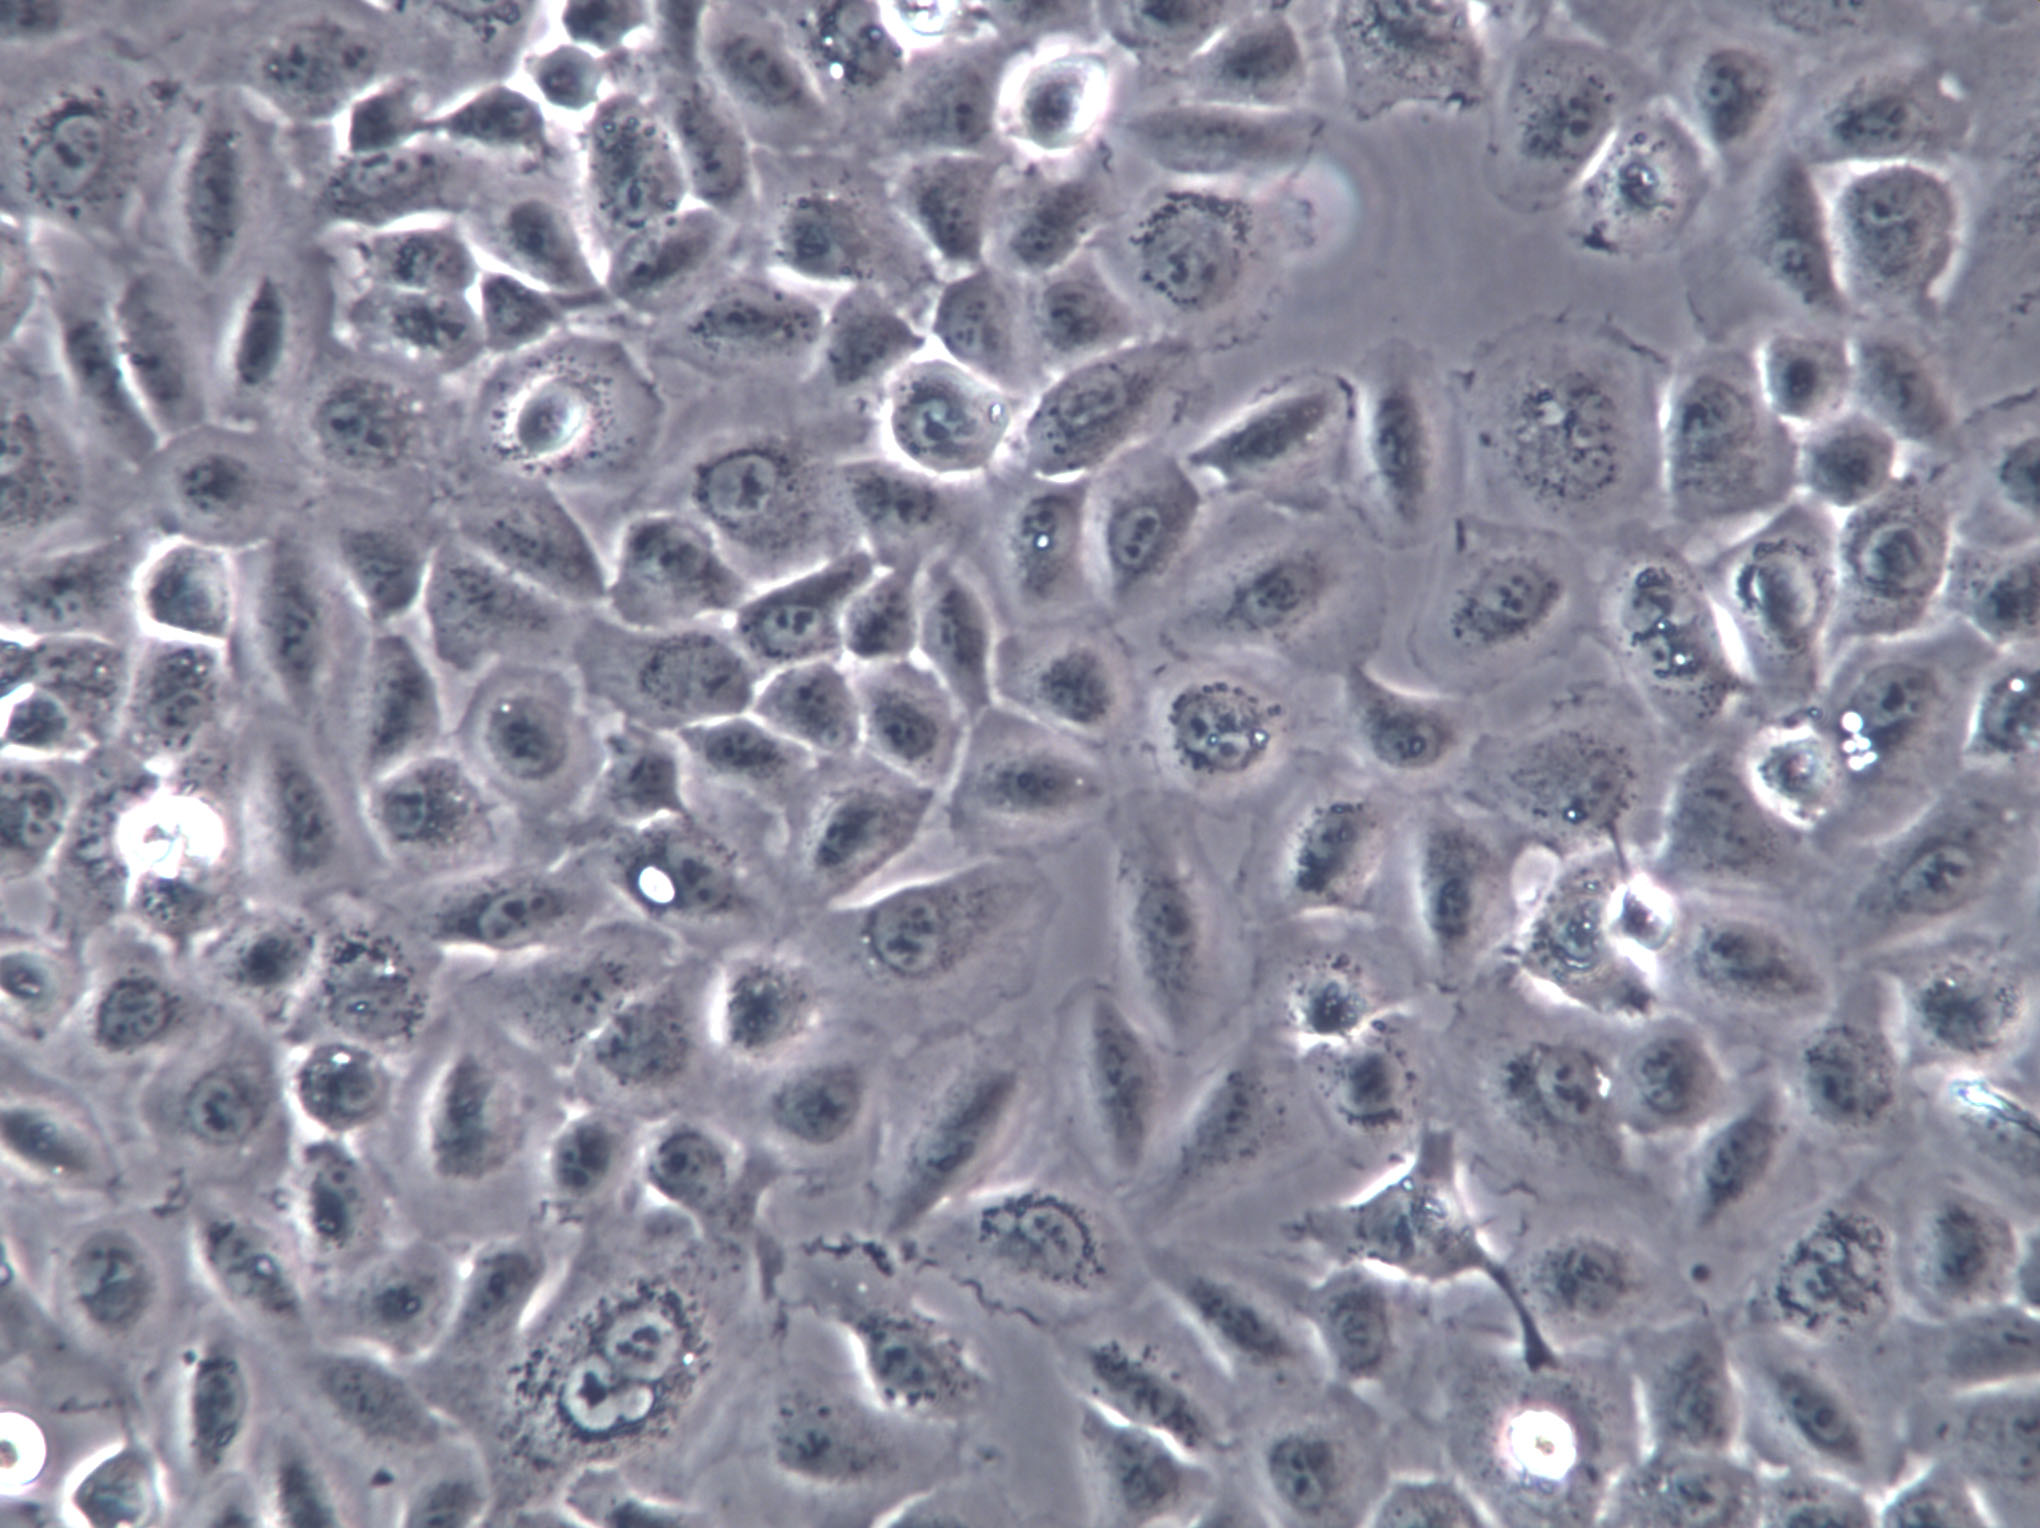 SNU-638 Cells|人胃癌克隆细胞,SNU-638 Cells